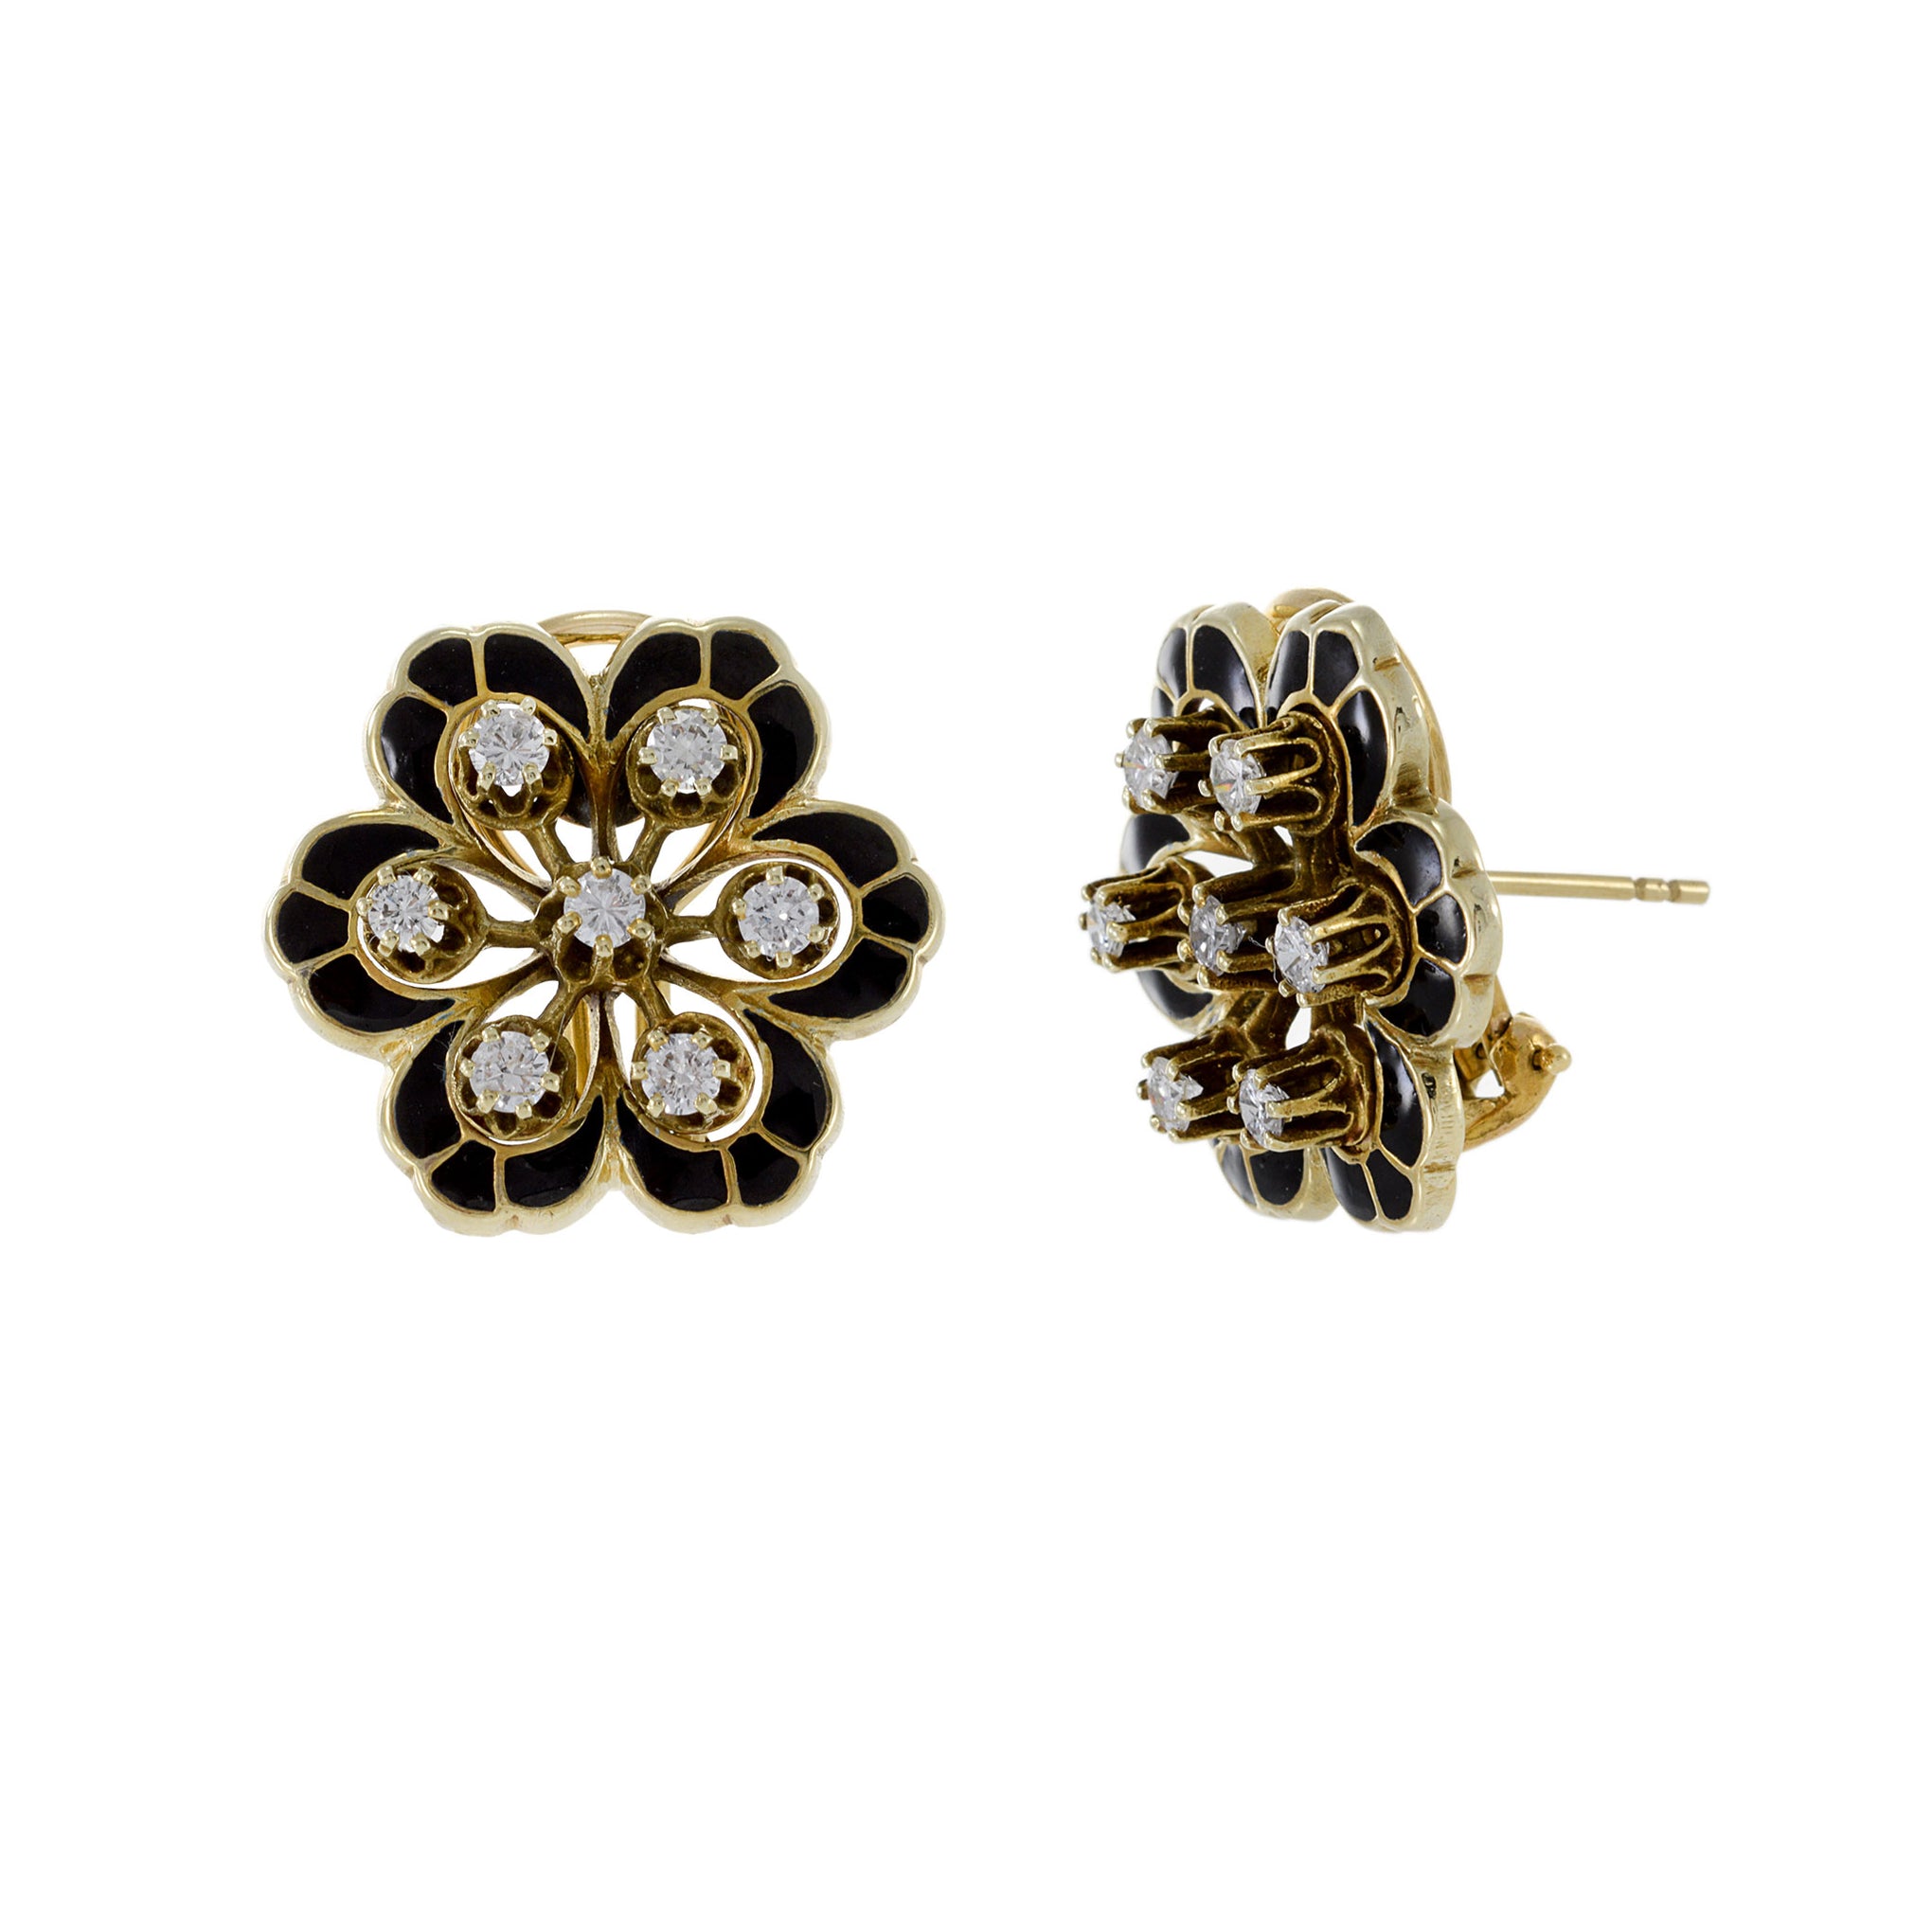 Vintage 1960s 14KT Yellow Gold Enamel and Diamond Flower Earrings